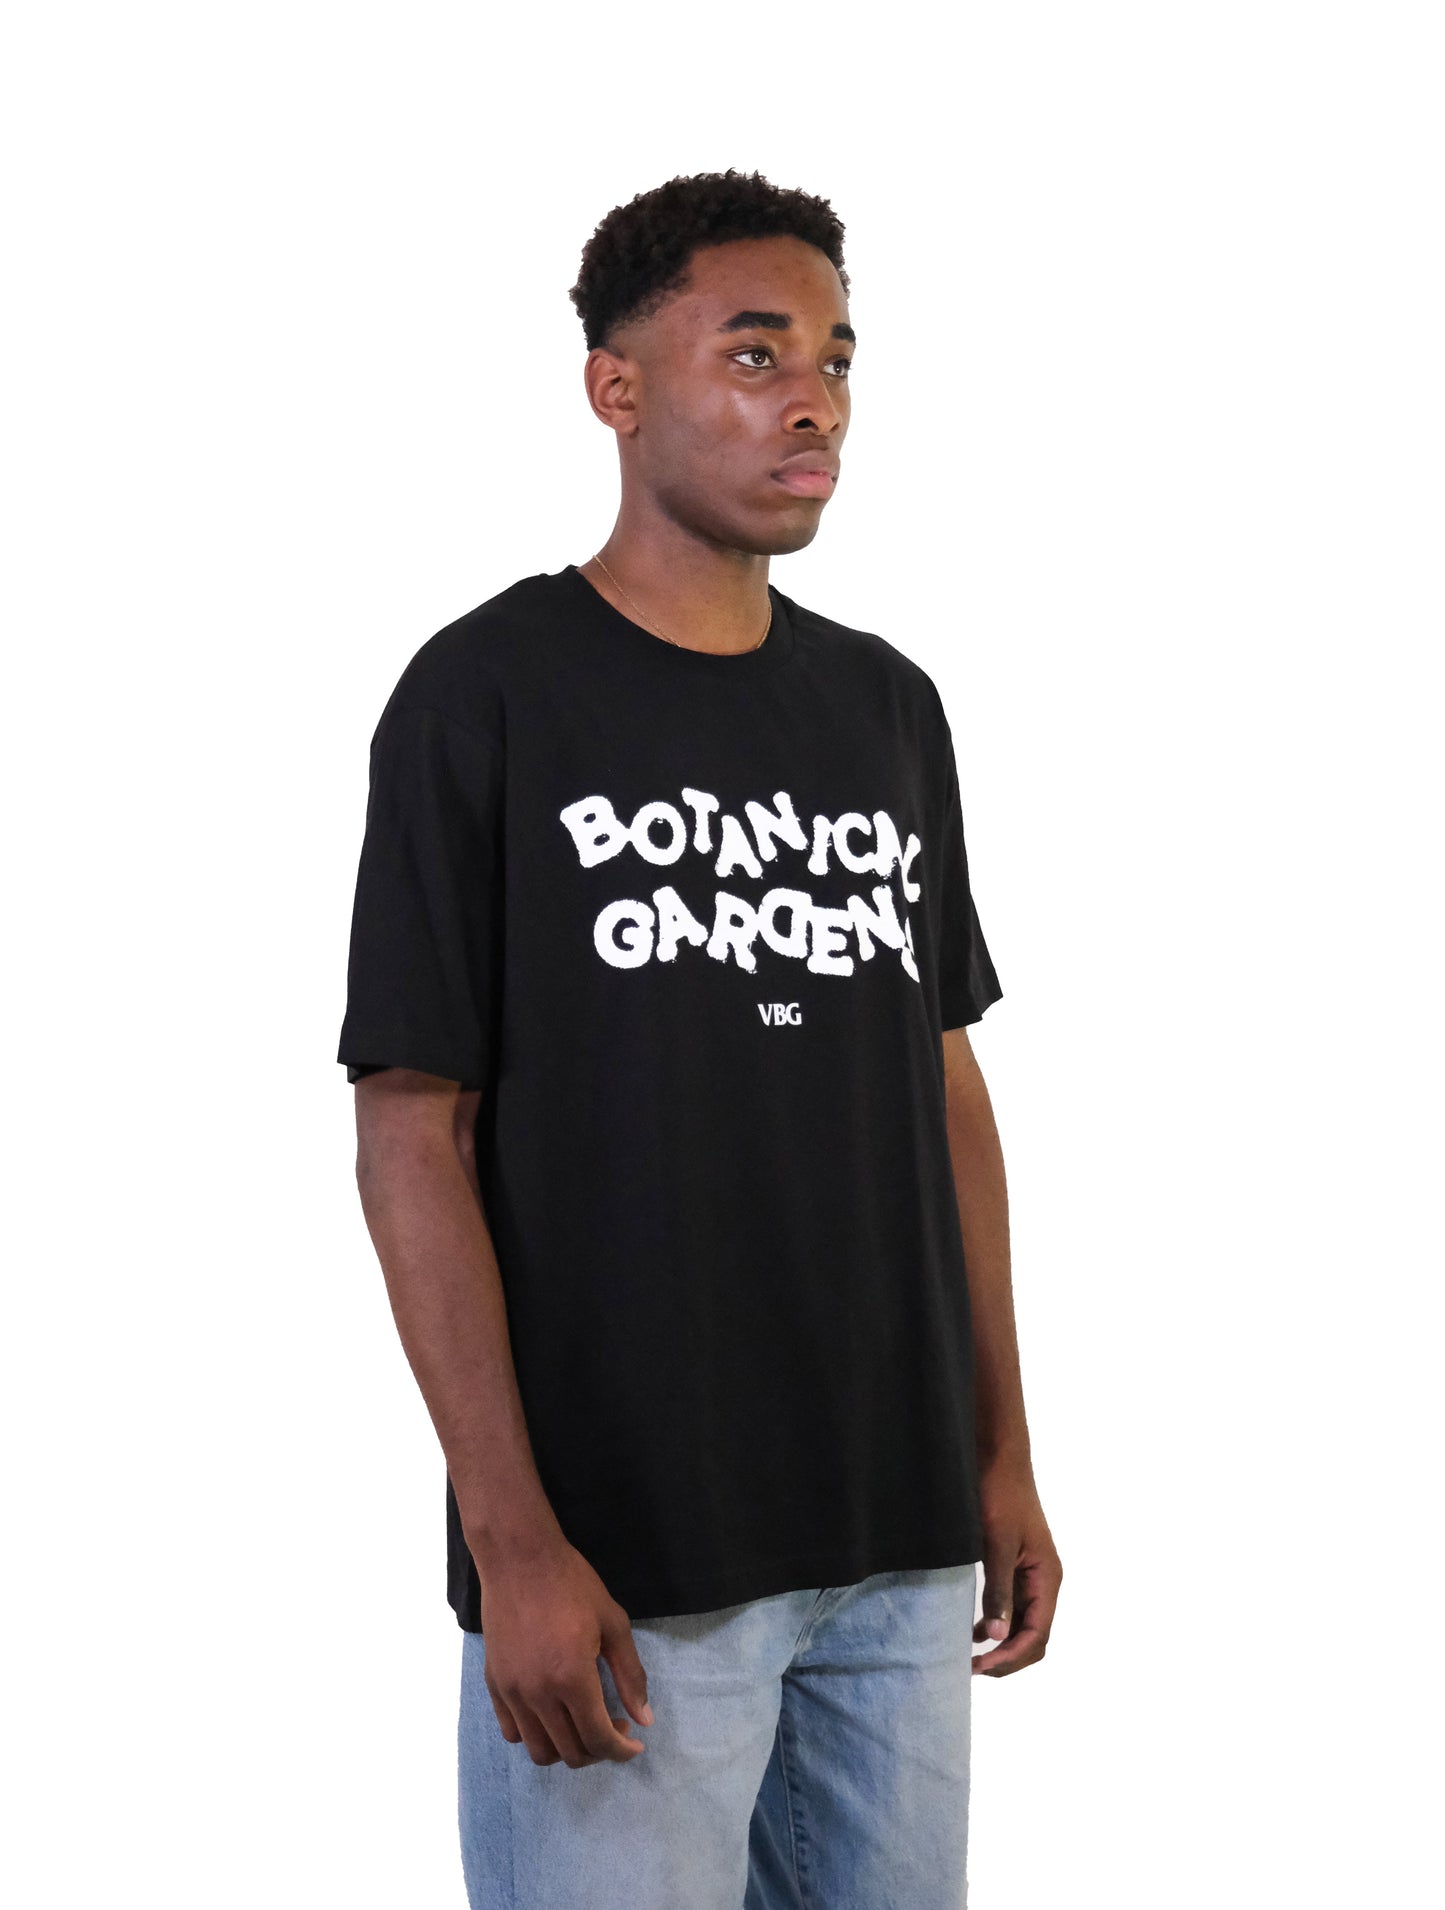 "Botanical Gardens" T-Shirt - Black/White - VBG